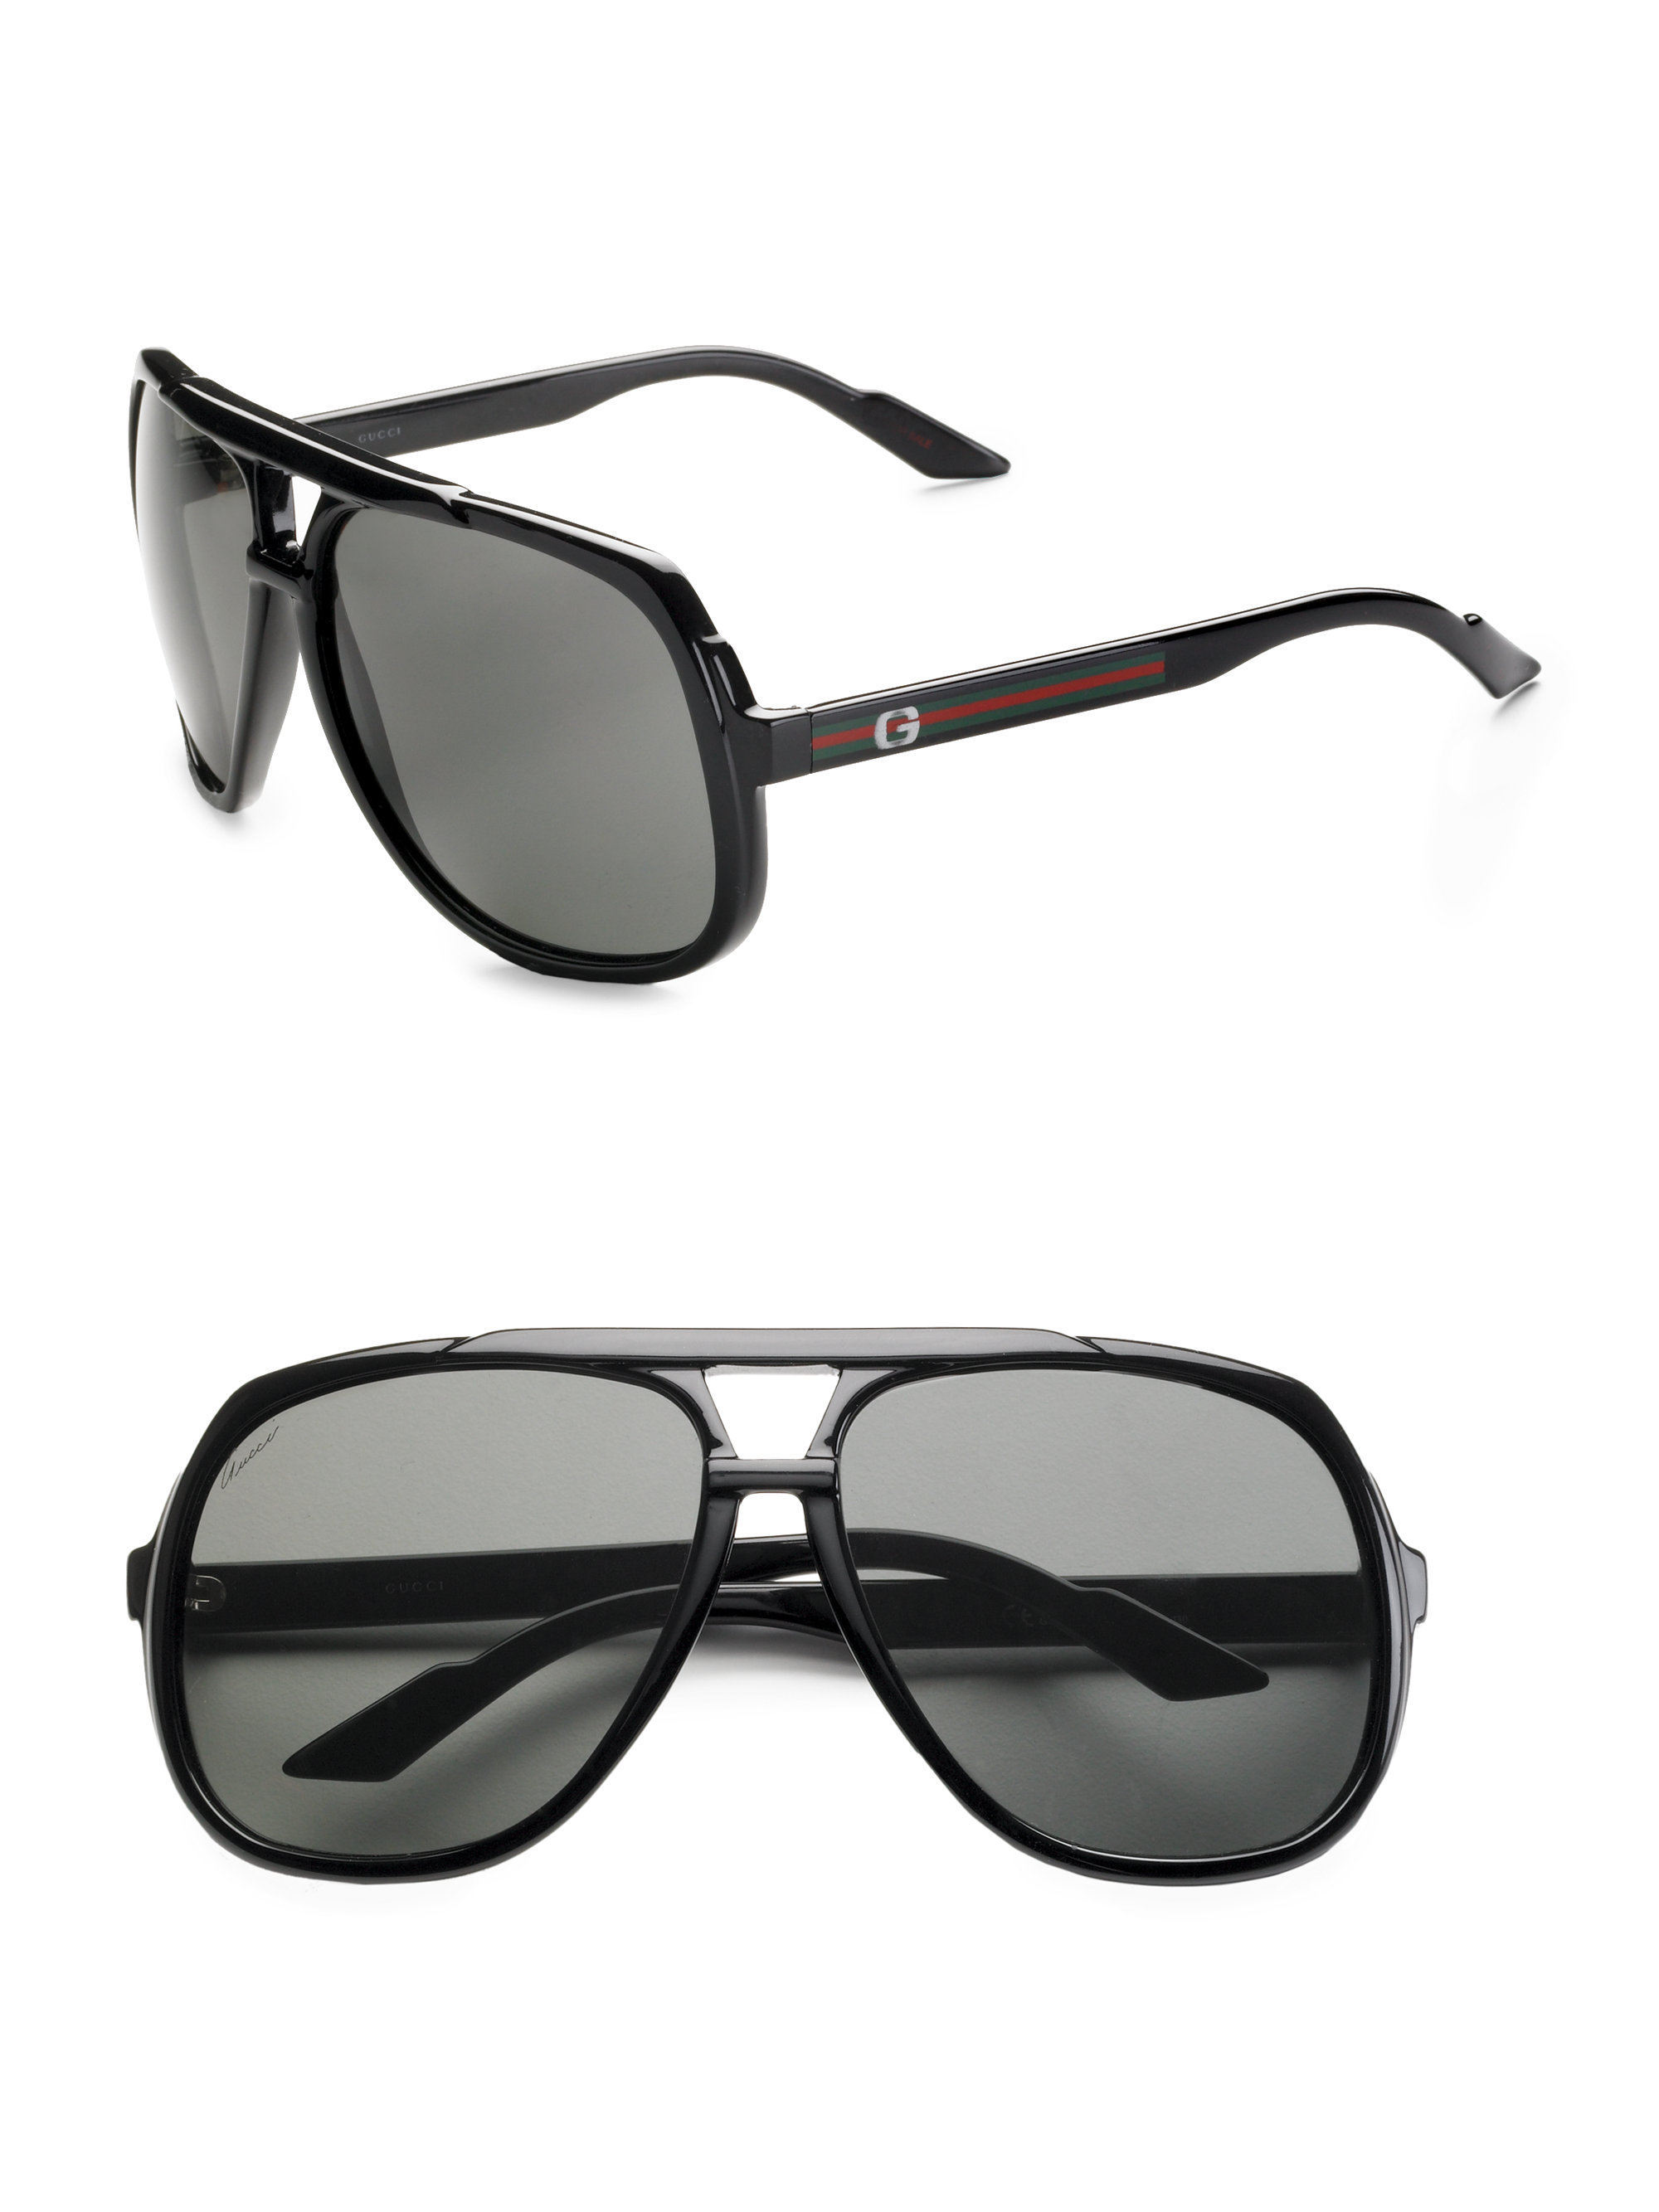 Gucci Navigator Sunglasses in Black for Men - Lyst